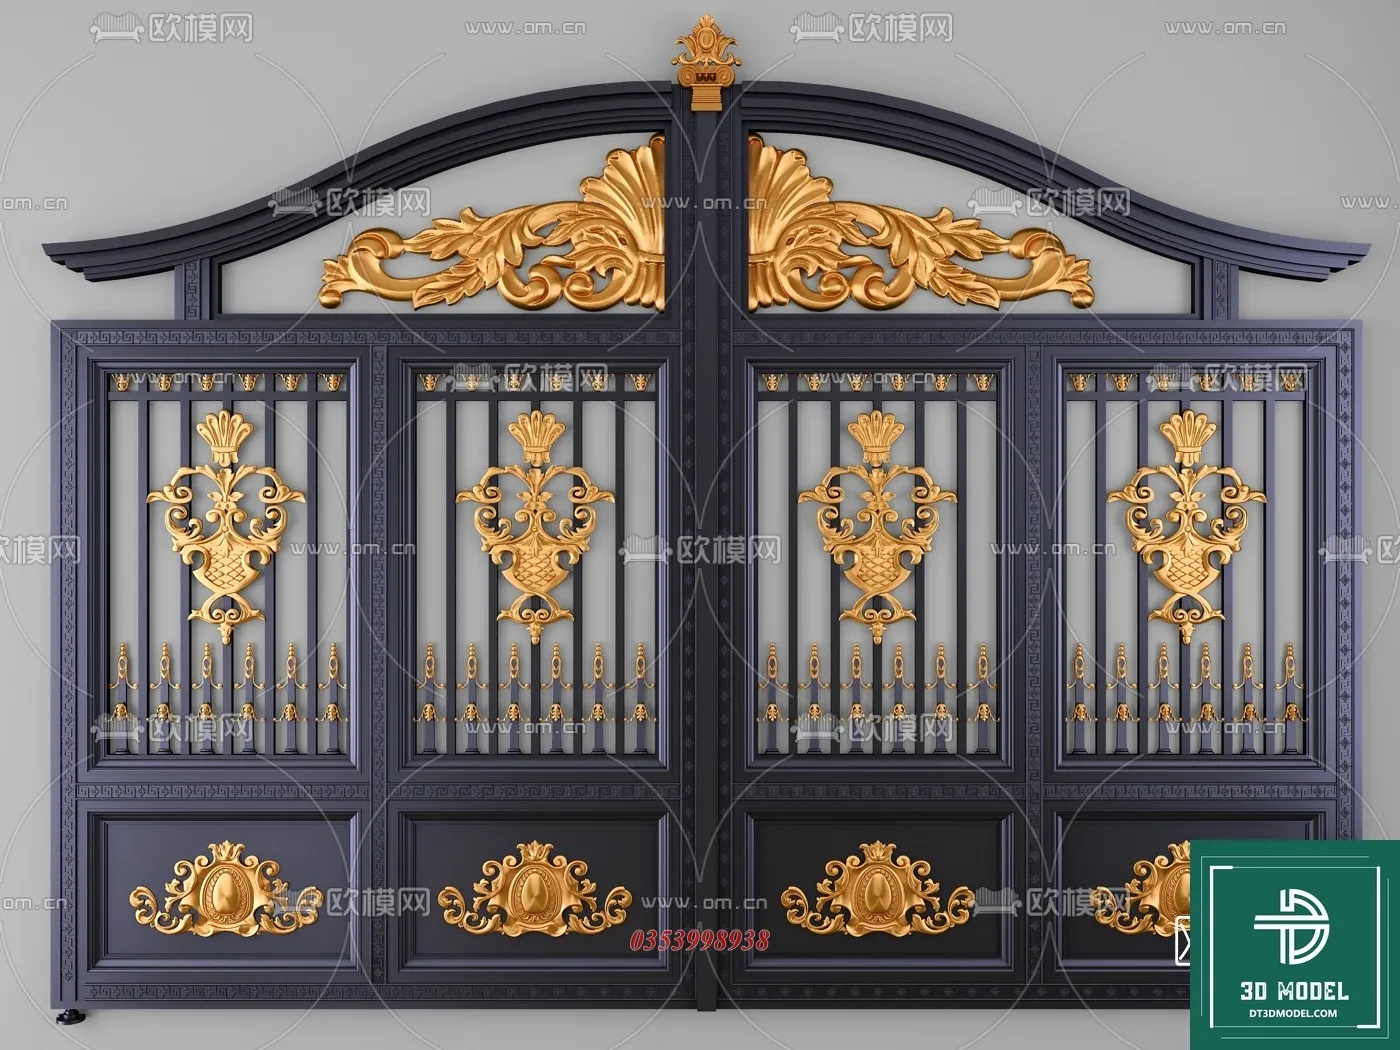 CLASSIC GATE – 3D MODELS – 052